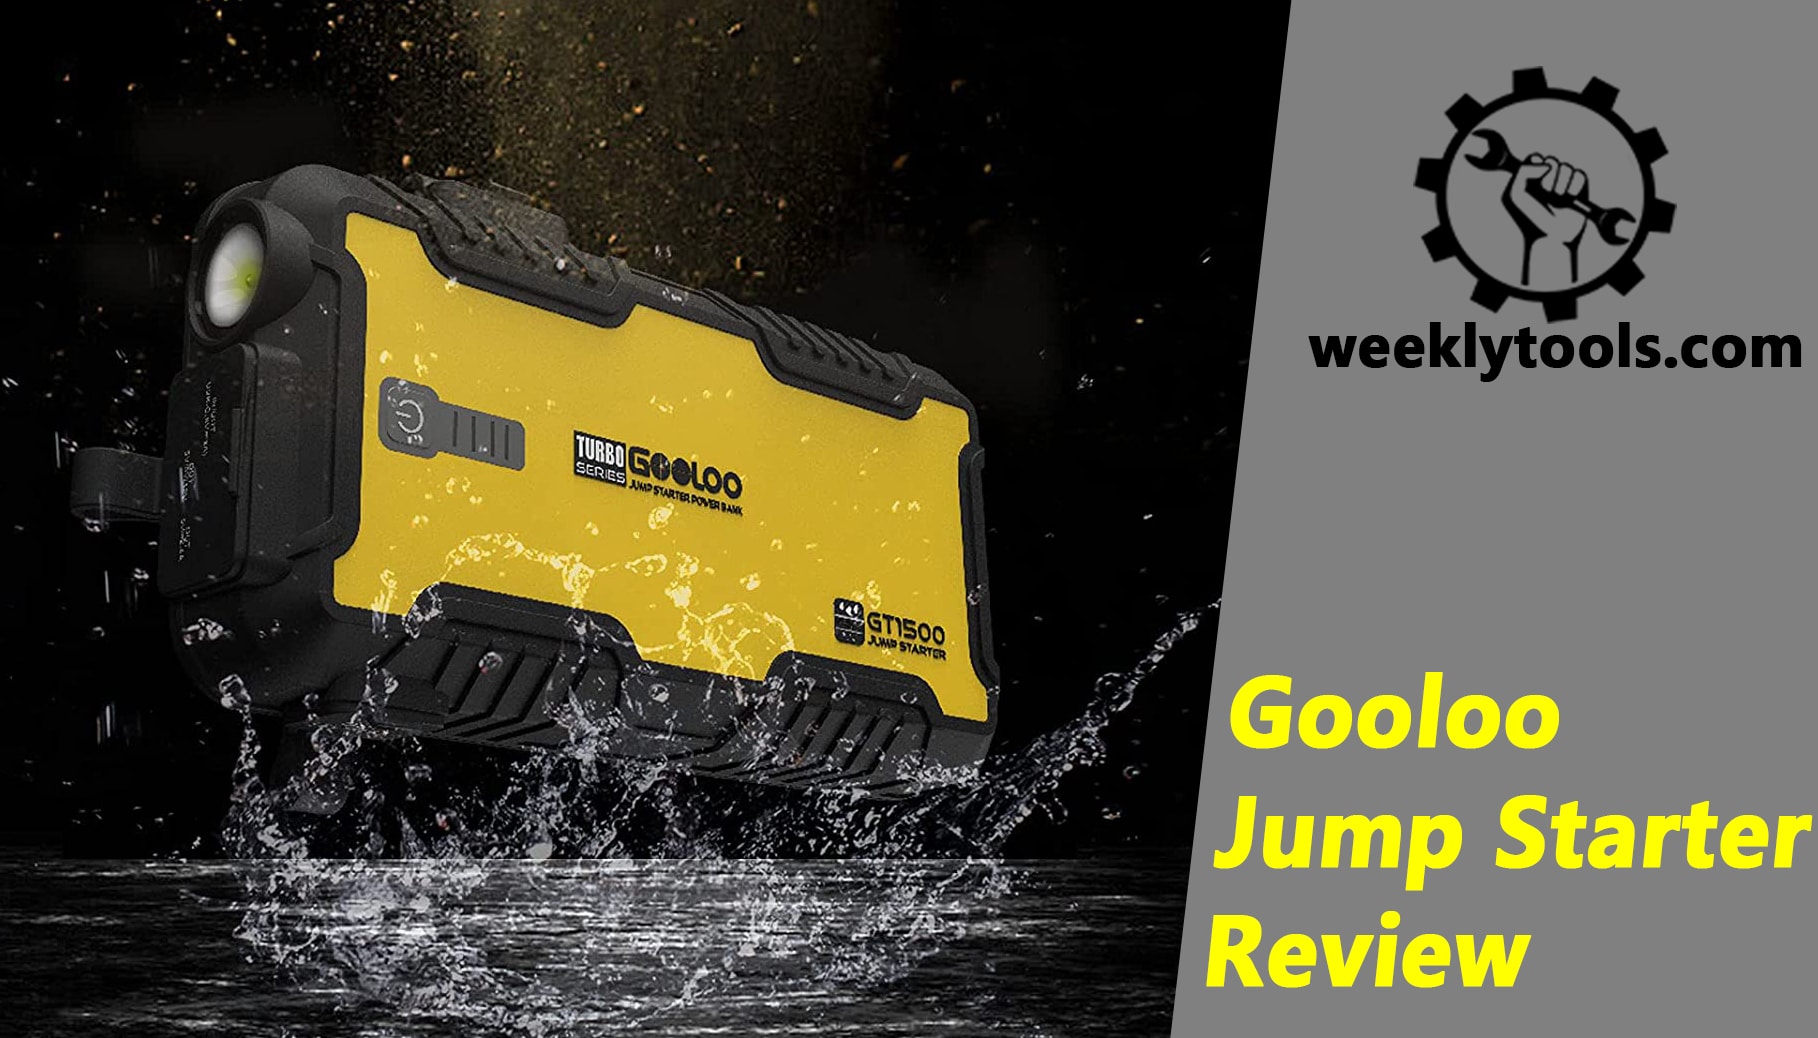 Gooloo Jump Starter Review